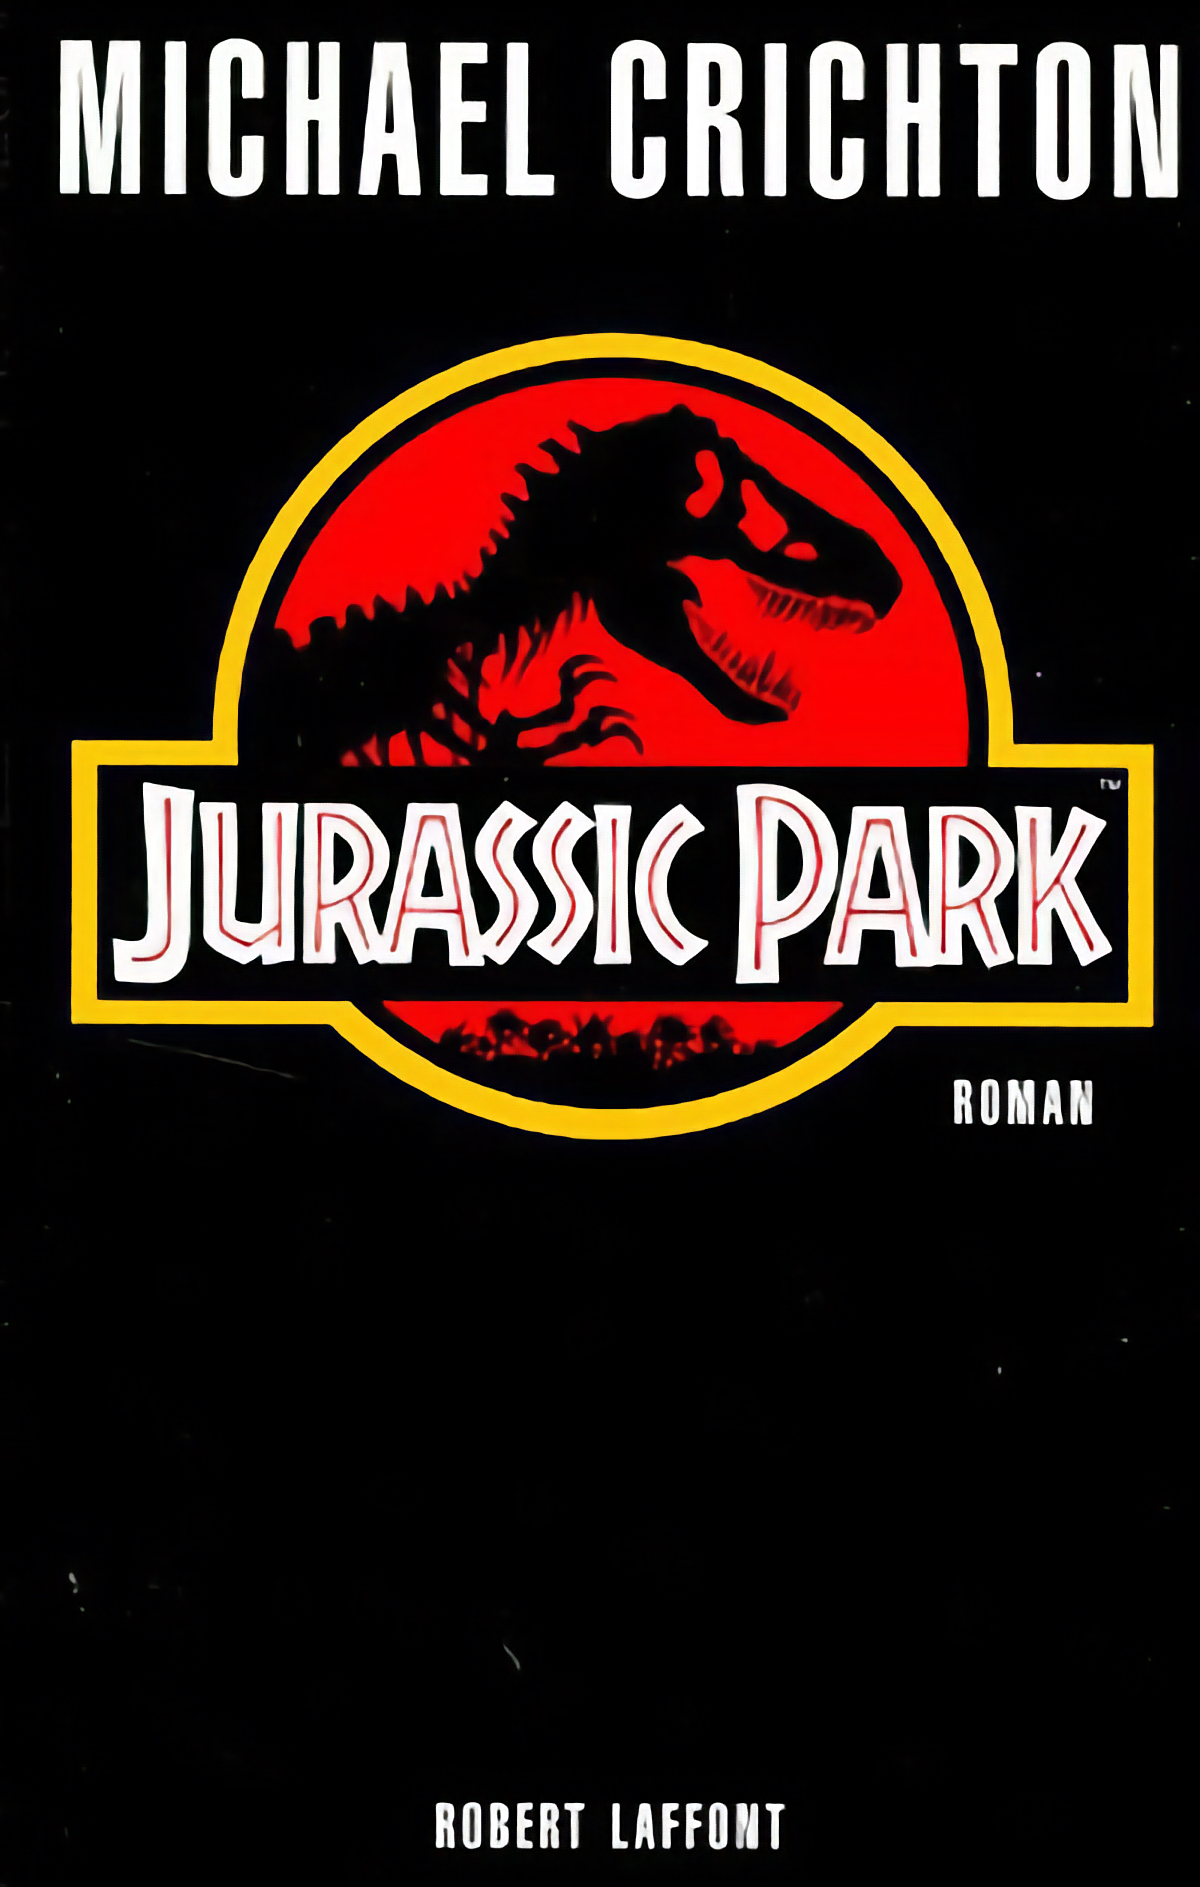 Michael Crichton: Jurassic Park (Français language, 1993, Robert Laffont)